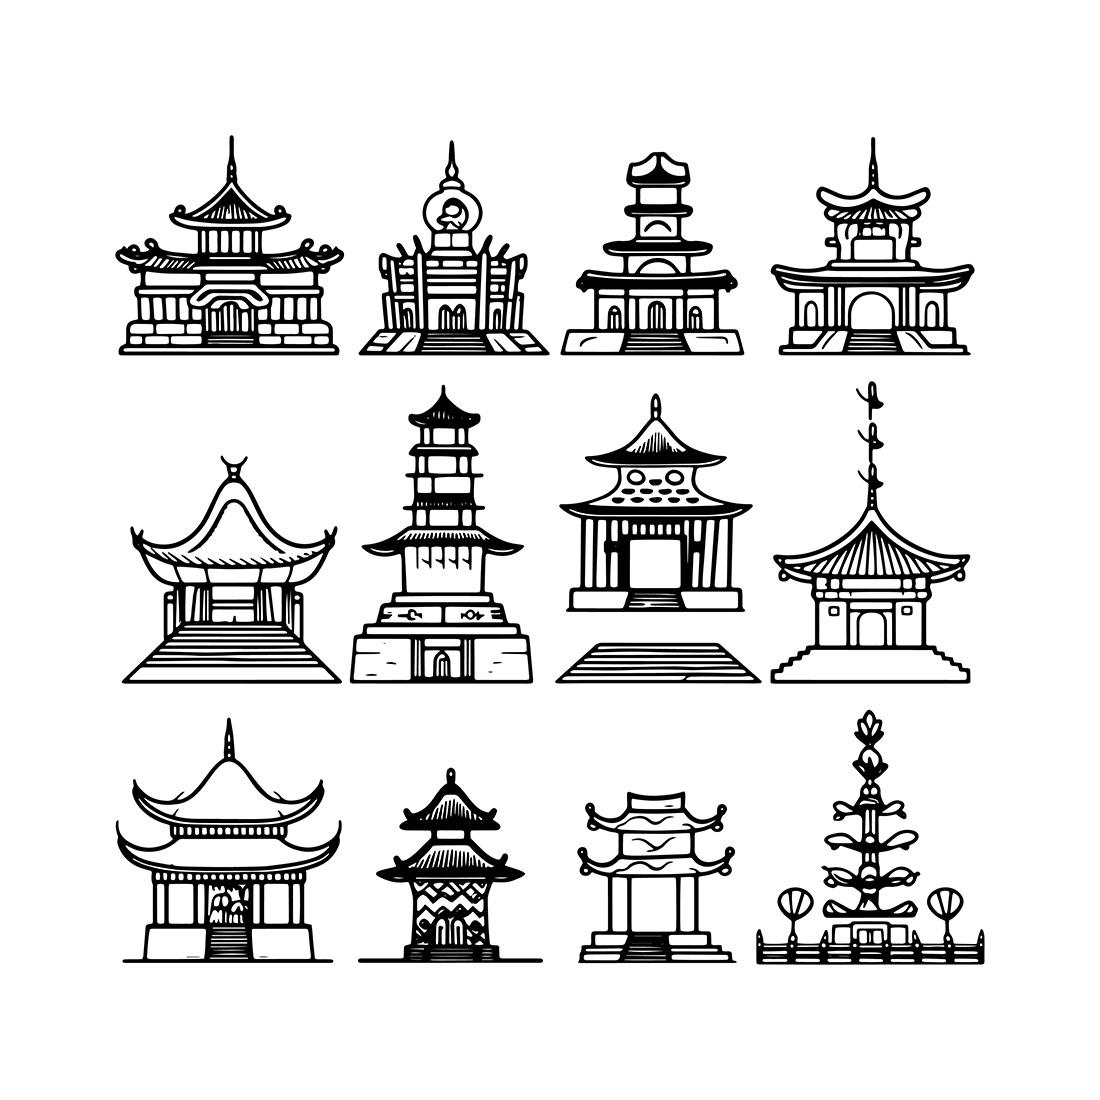 9 Chinese Temple Icons Bundle Set Illustration cover image.